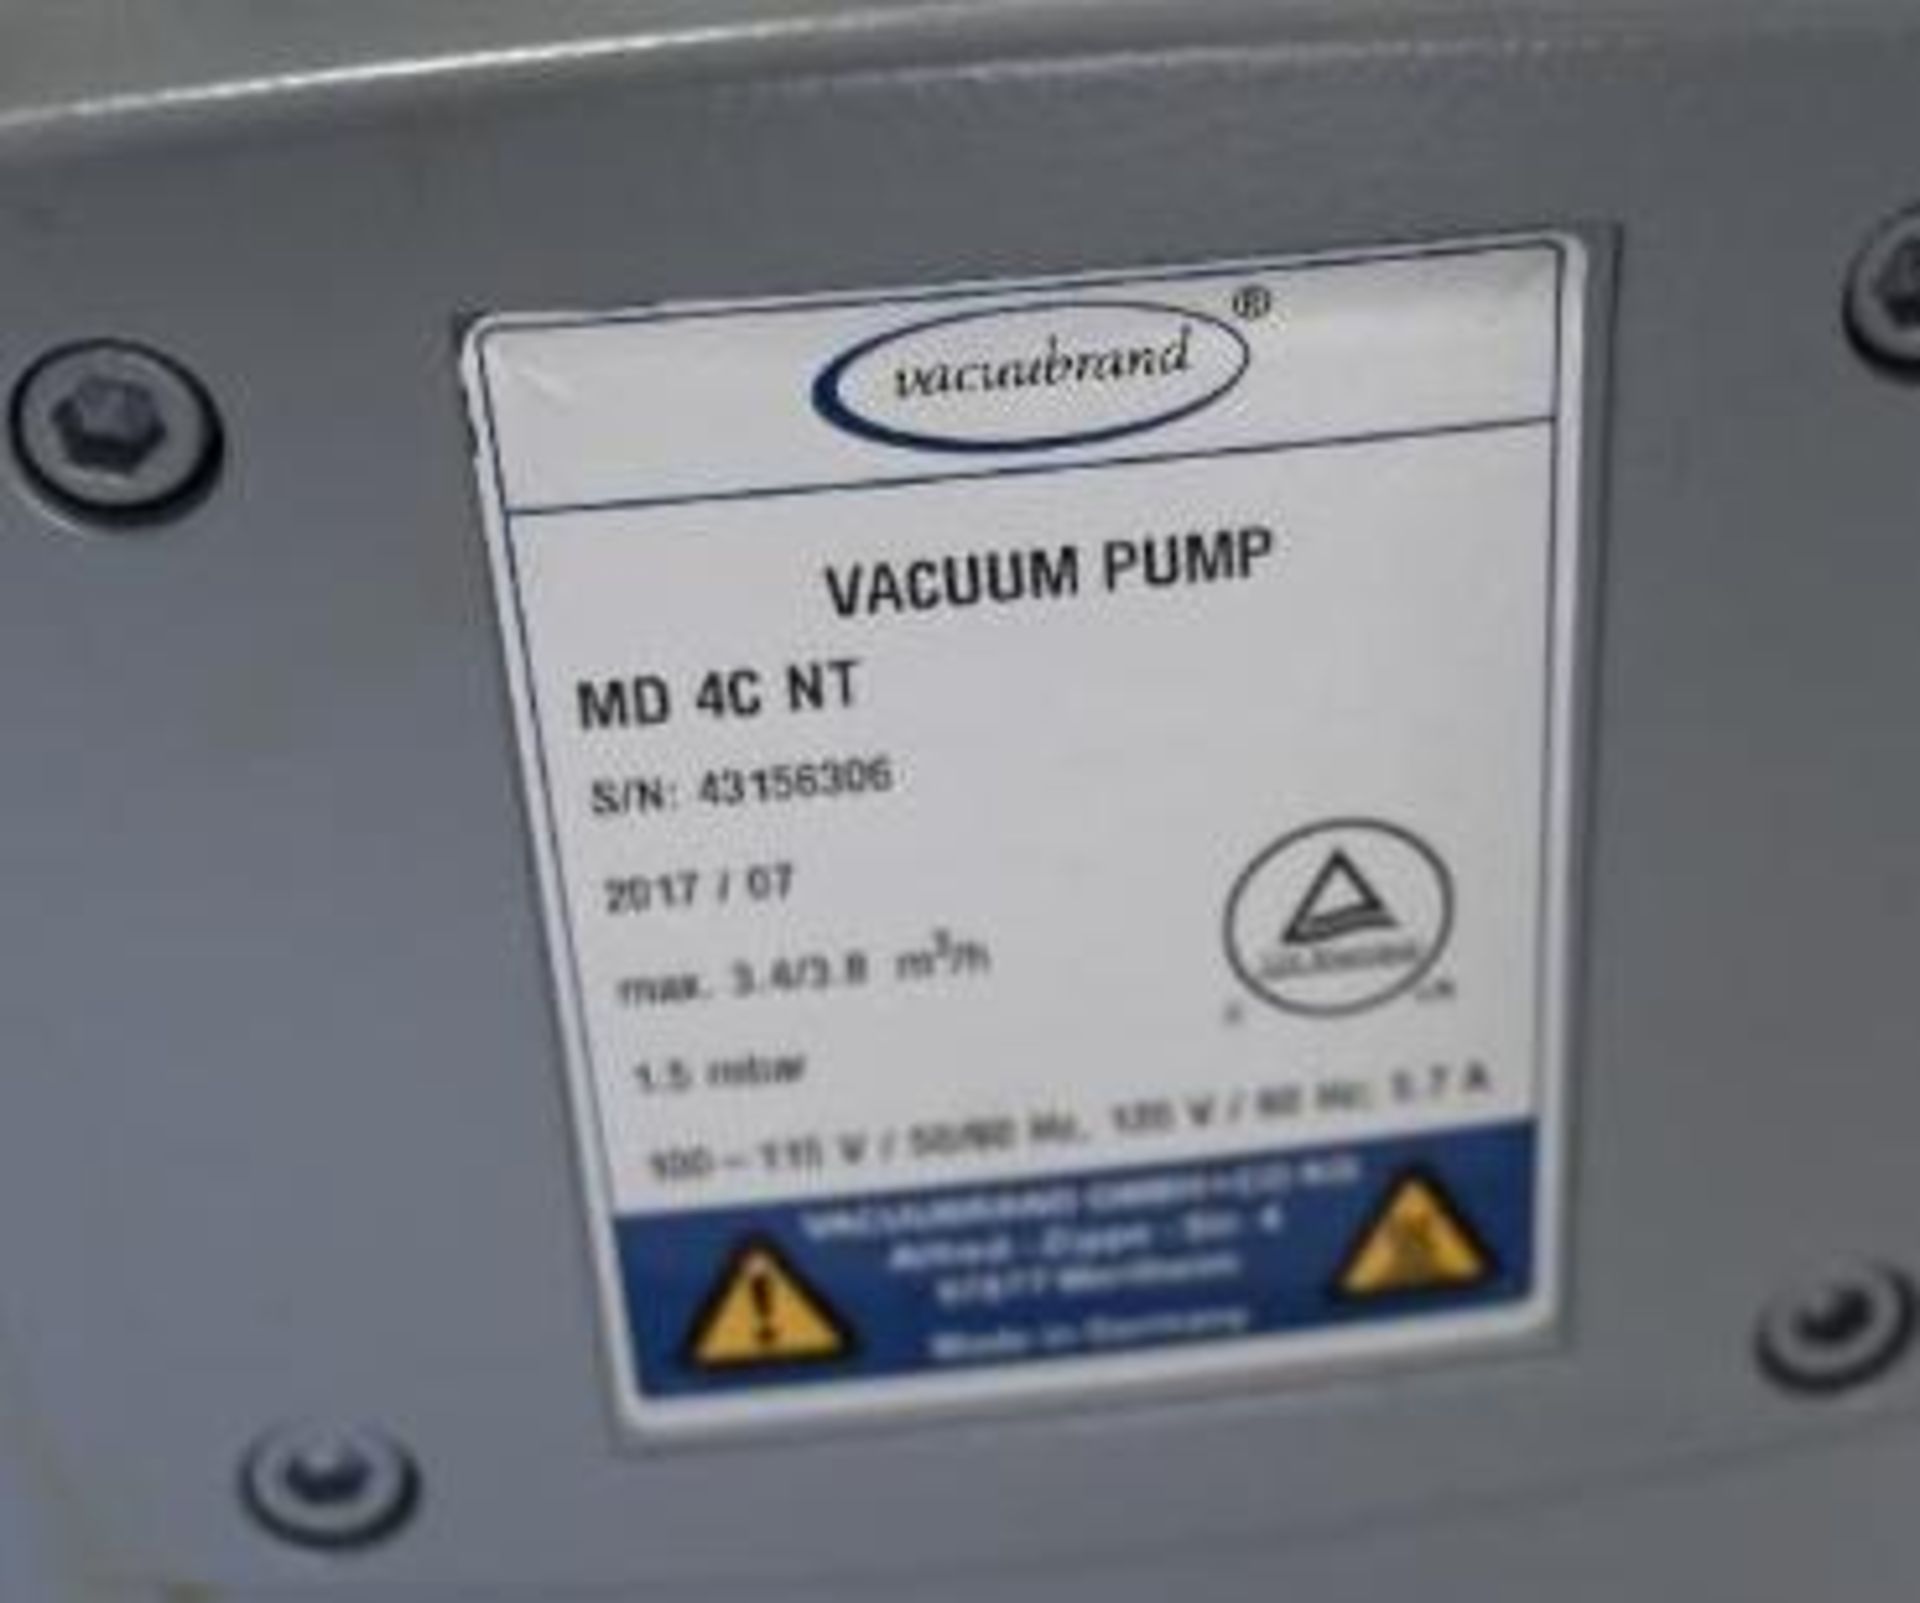 Vacuubrand model MD 4C NT Vacuum Pump - Image 3 of 5